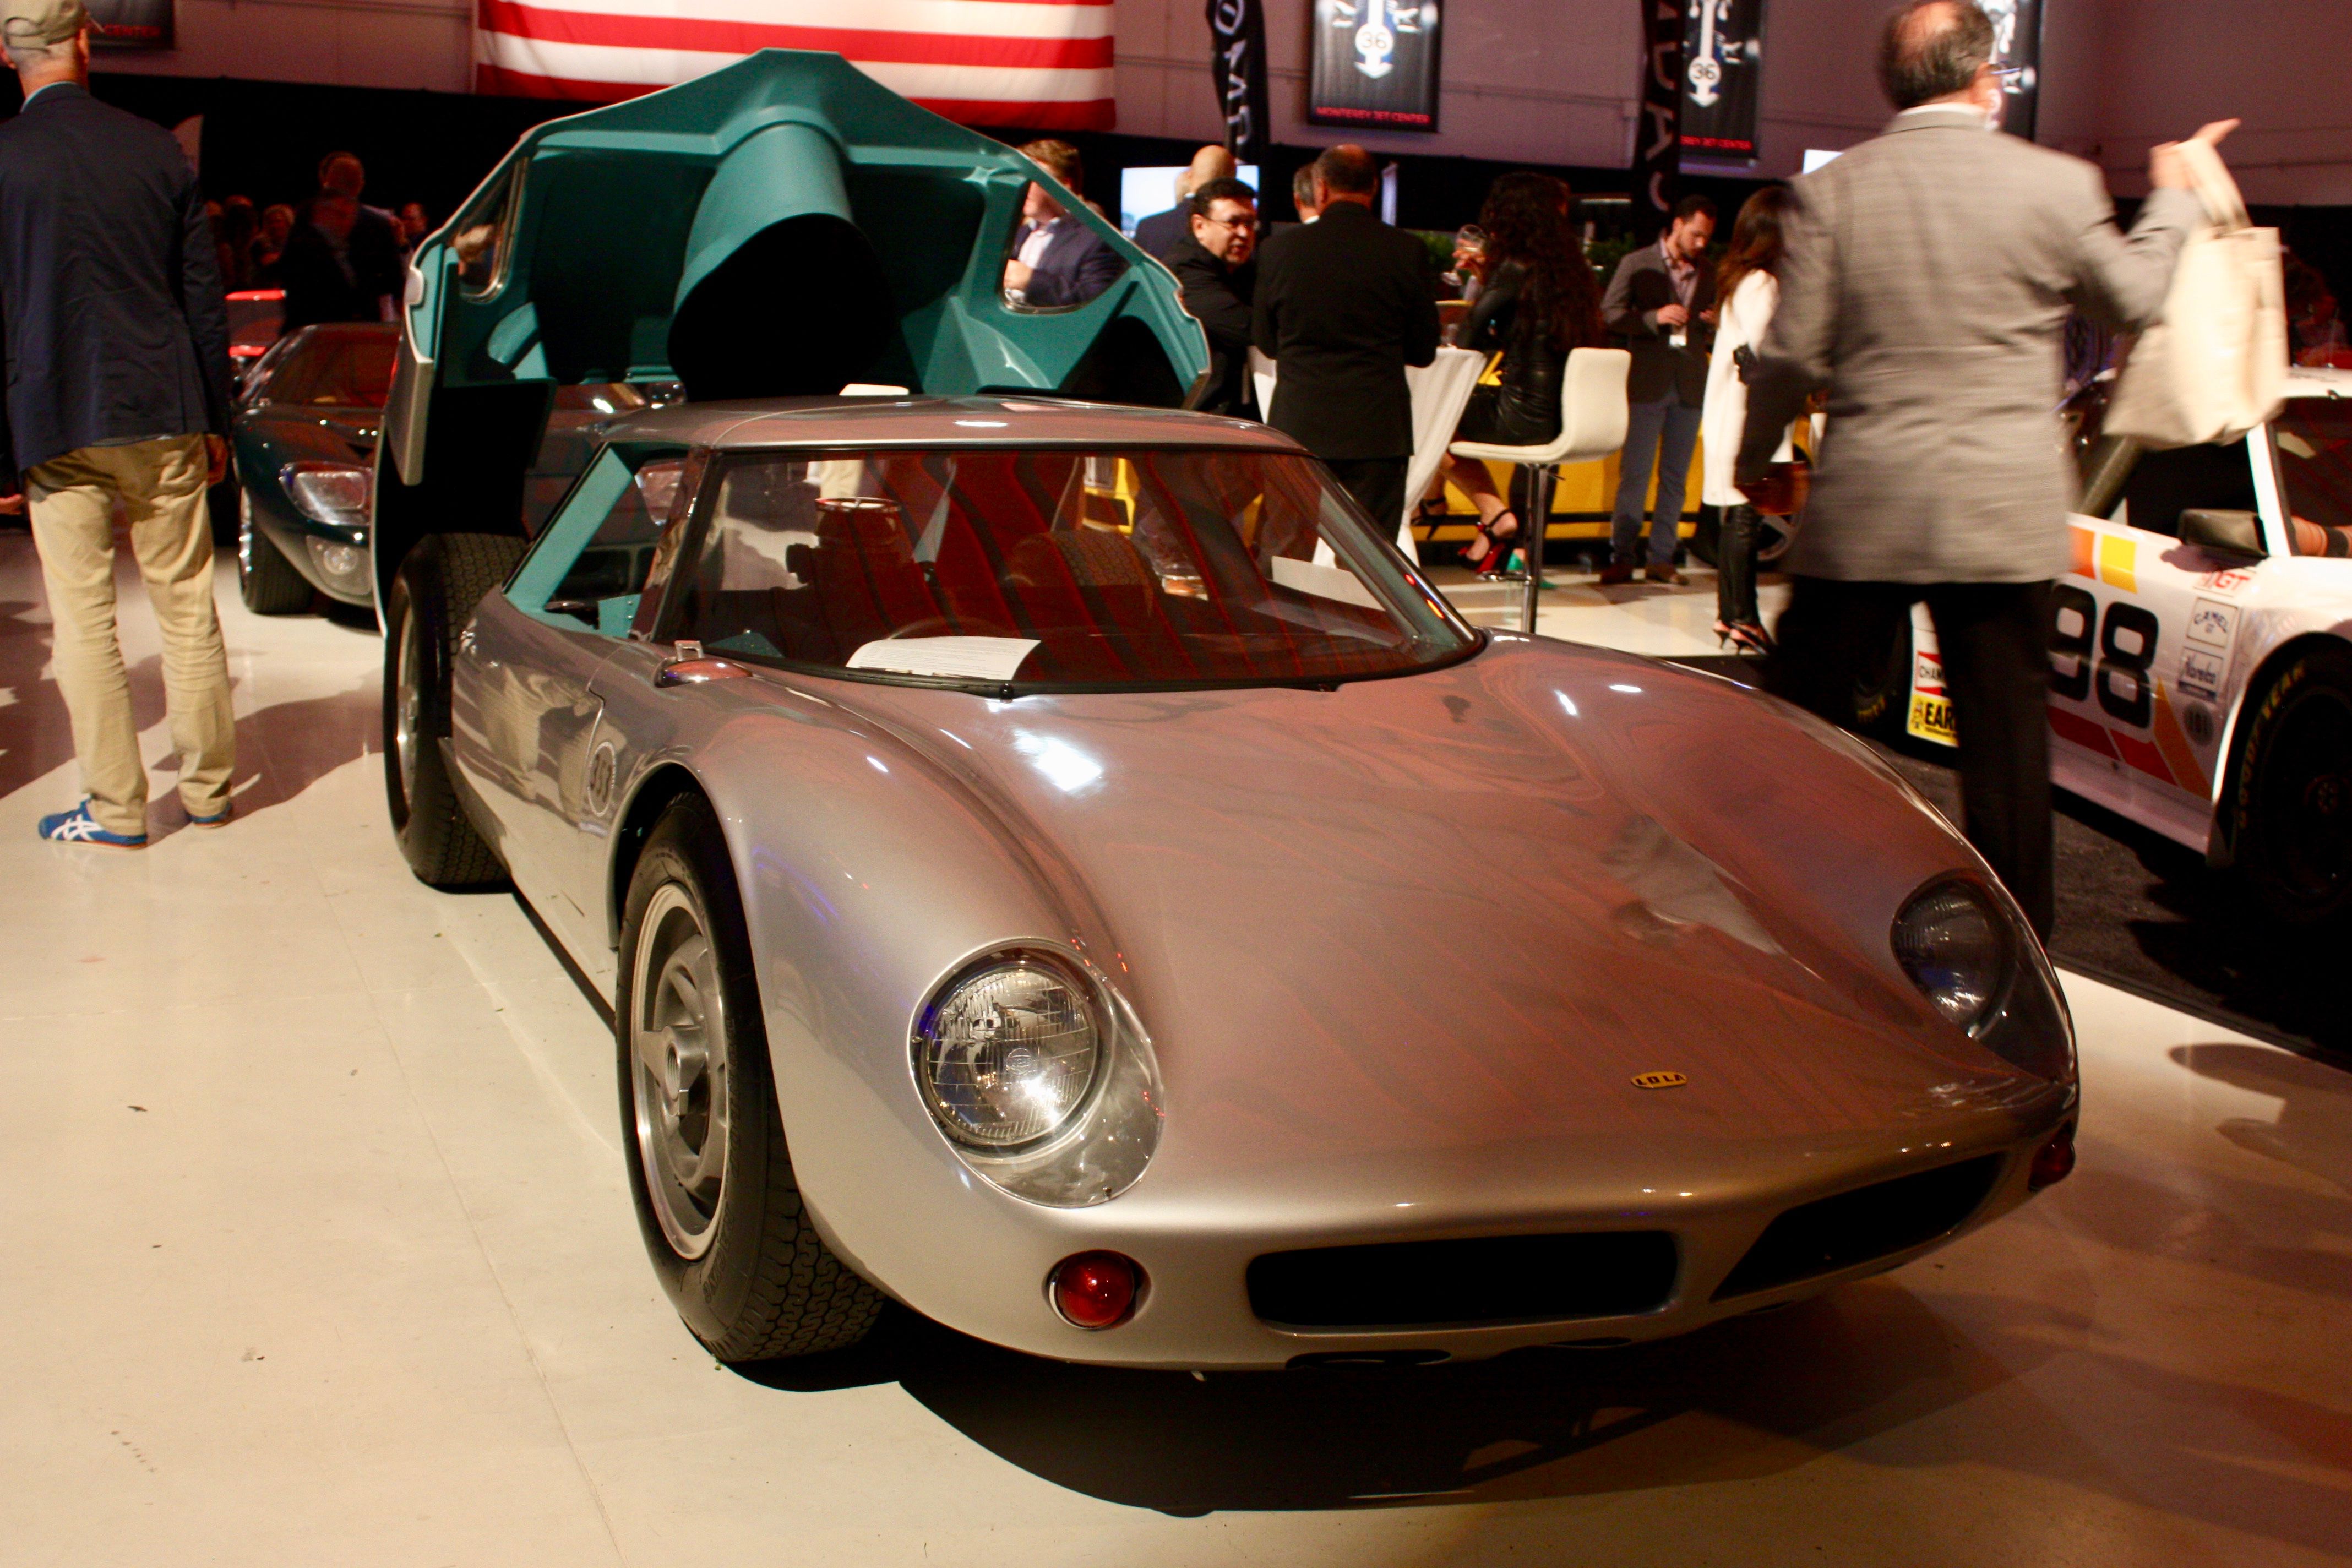 The 1963 Lola Mk6 revealed in London